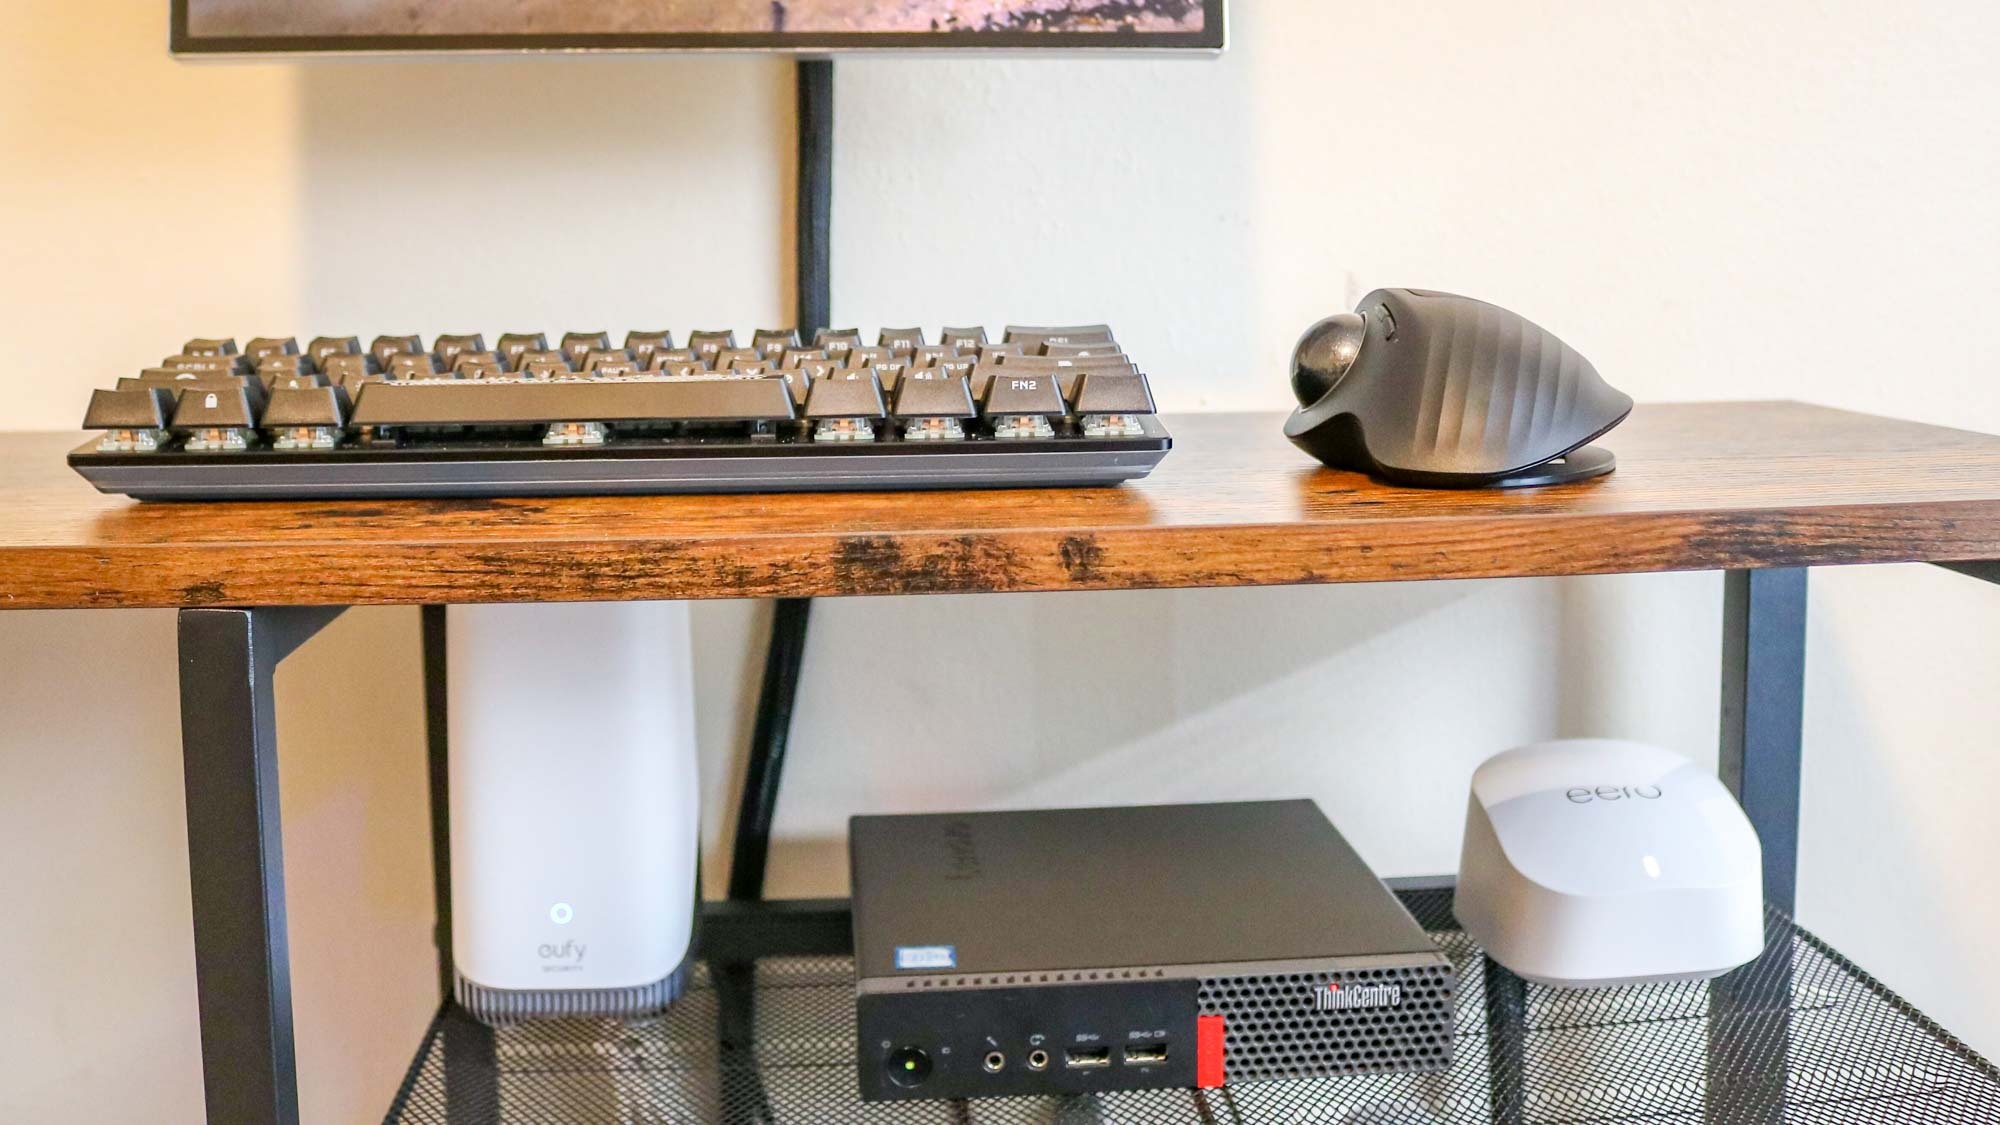 A Lenovo ThinkCentre Tiny next to a mesh router